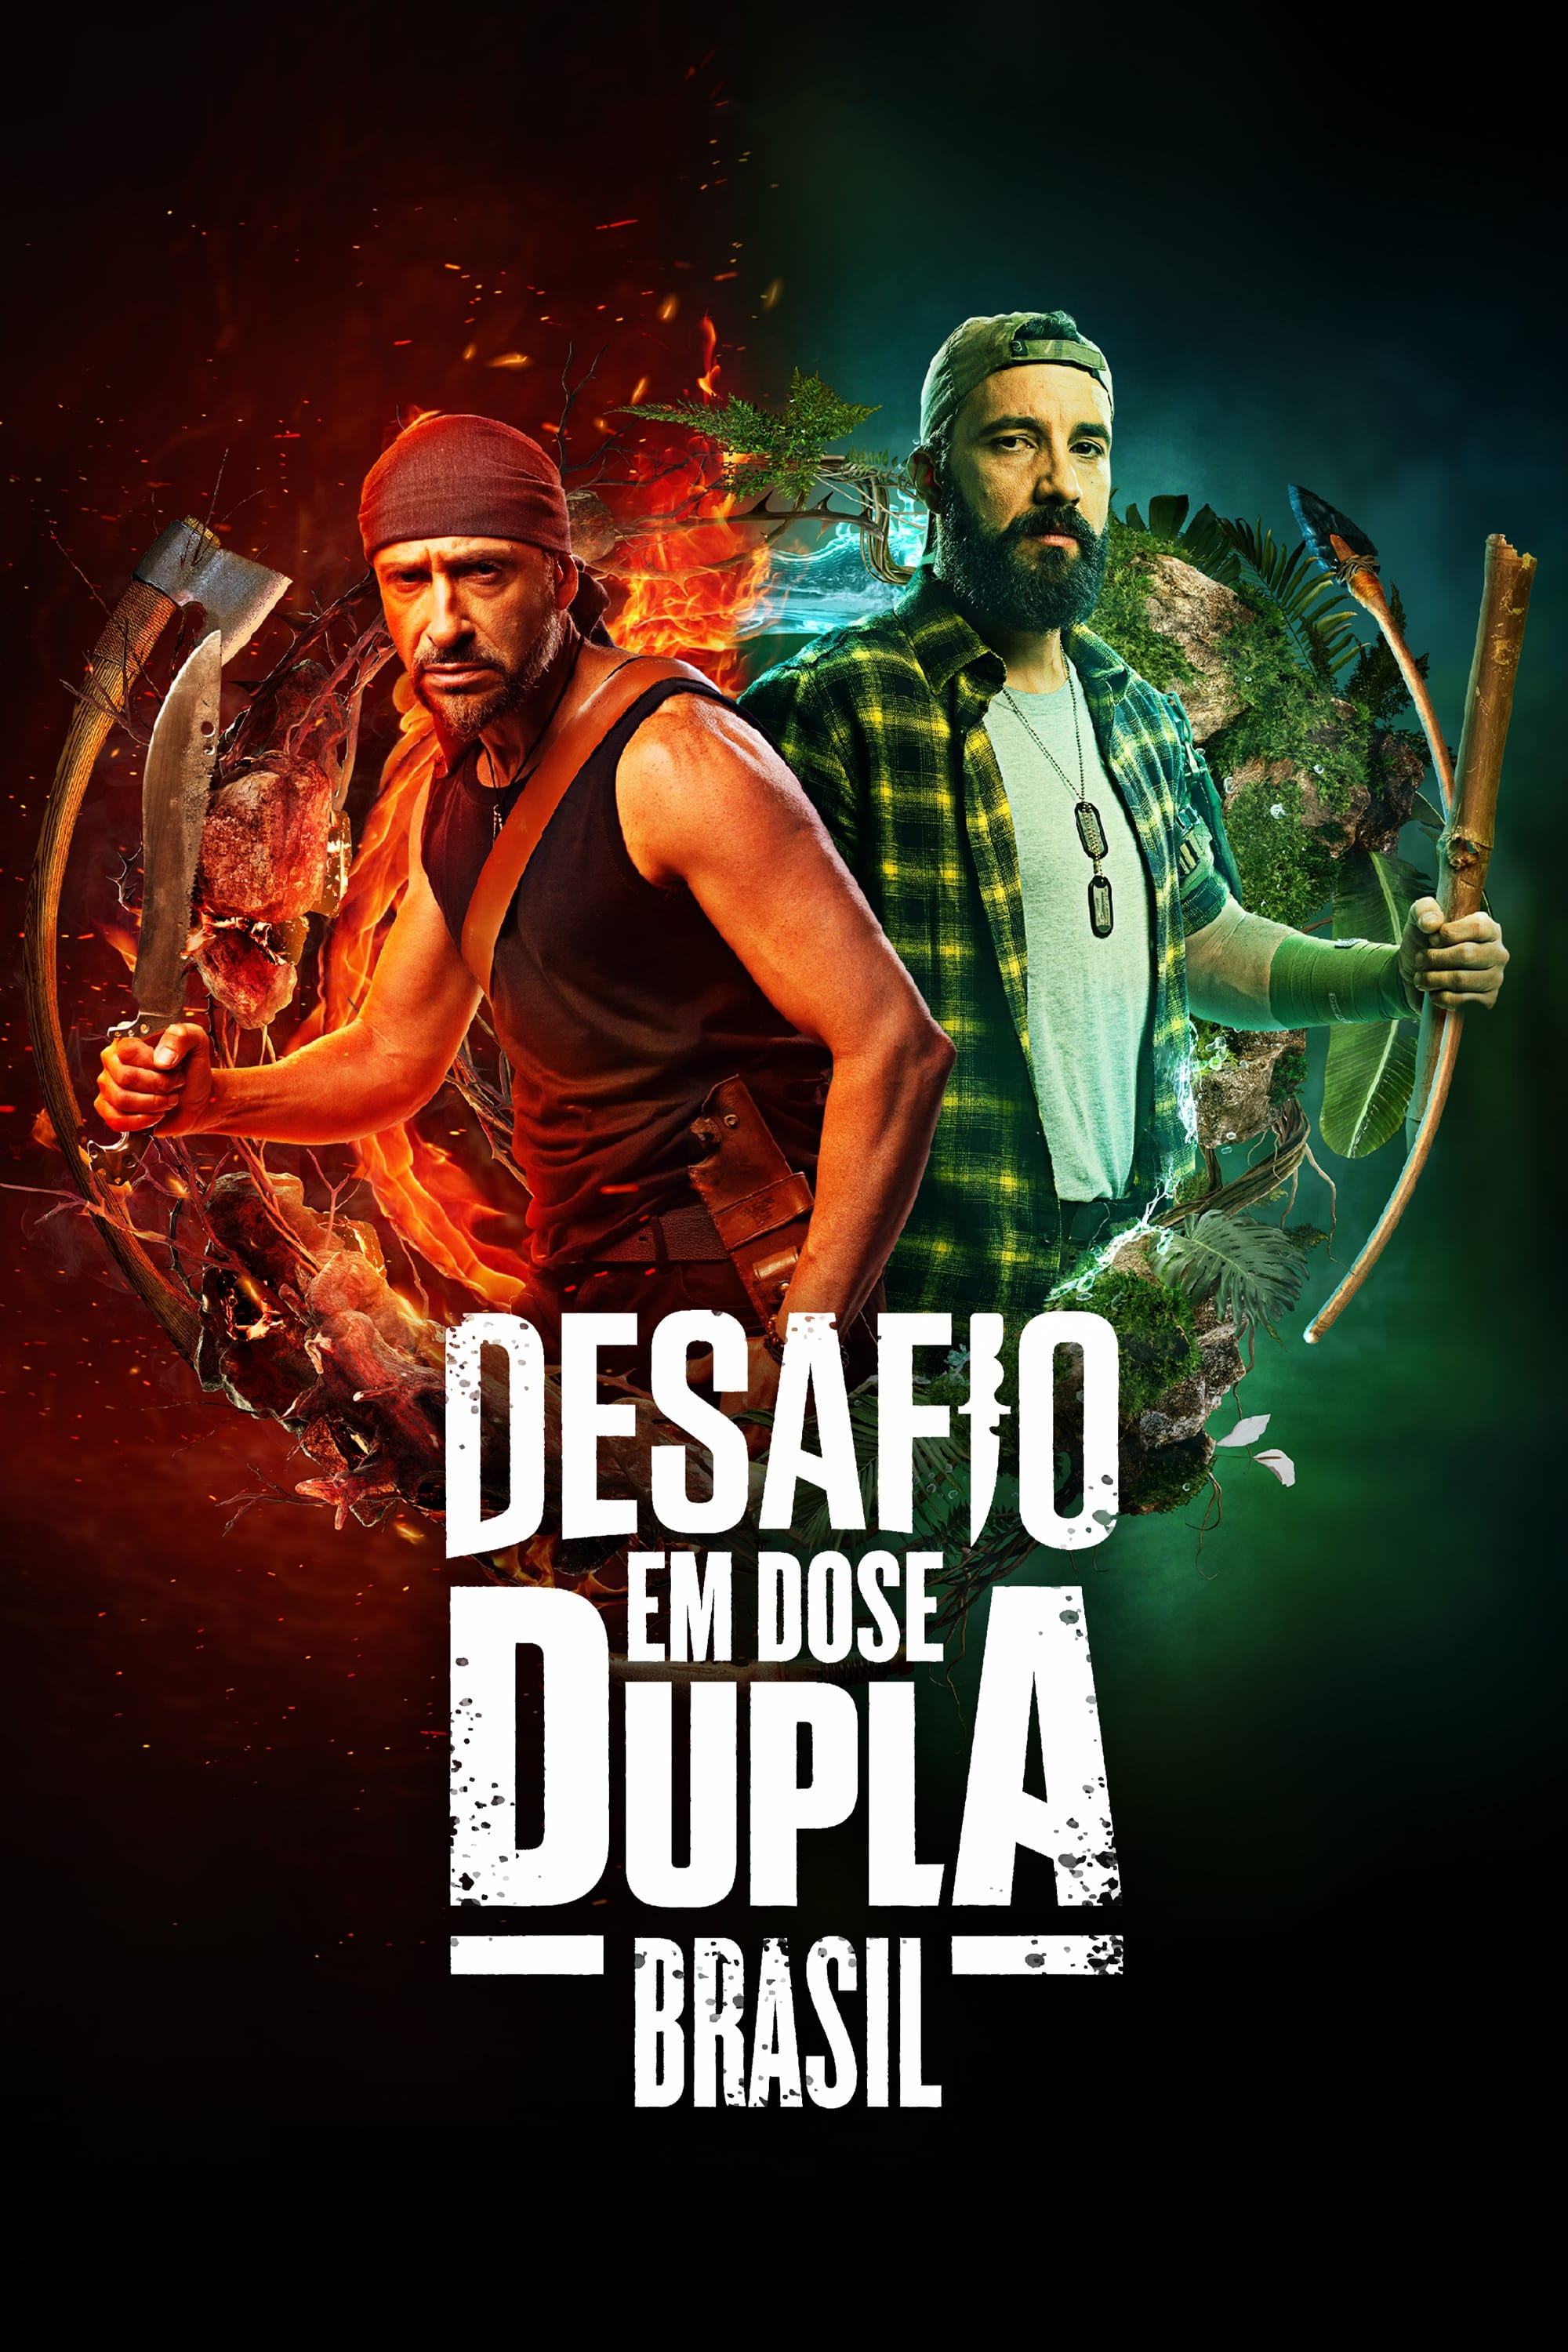 TV ratings for Dual Survival Brazil (Desafio Em Dose Dupla Brasil) in Turkey. Discovery+ TV series